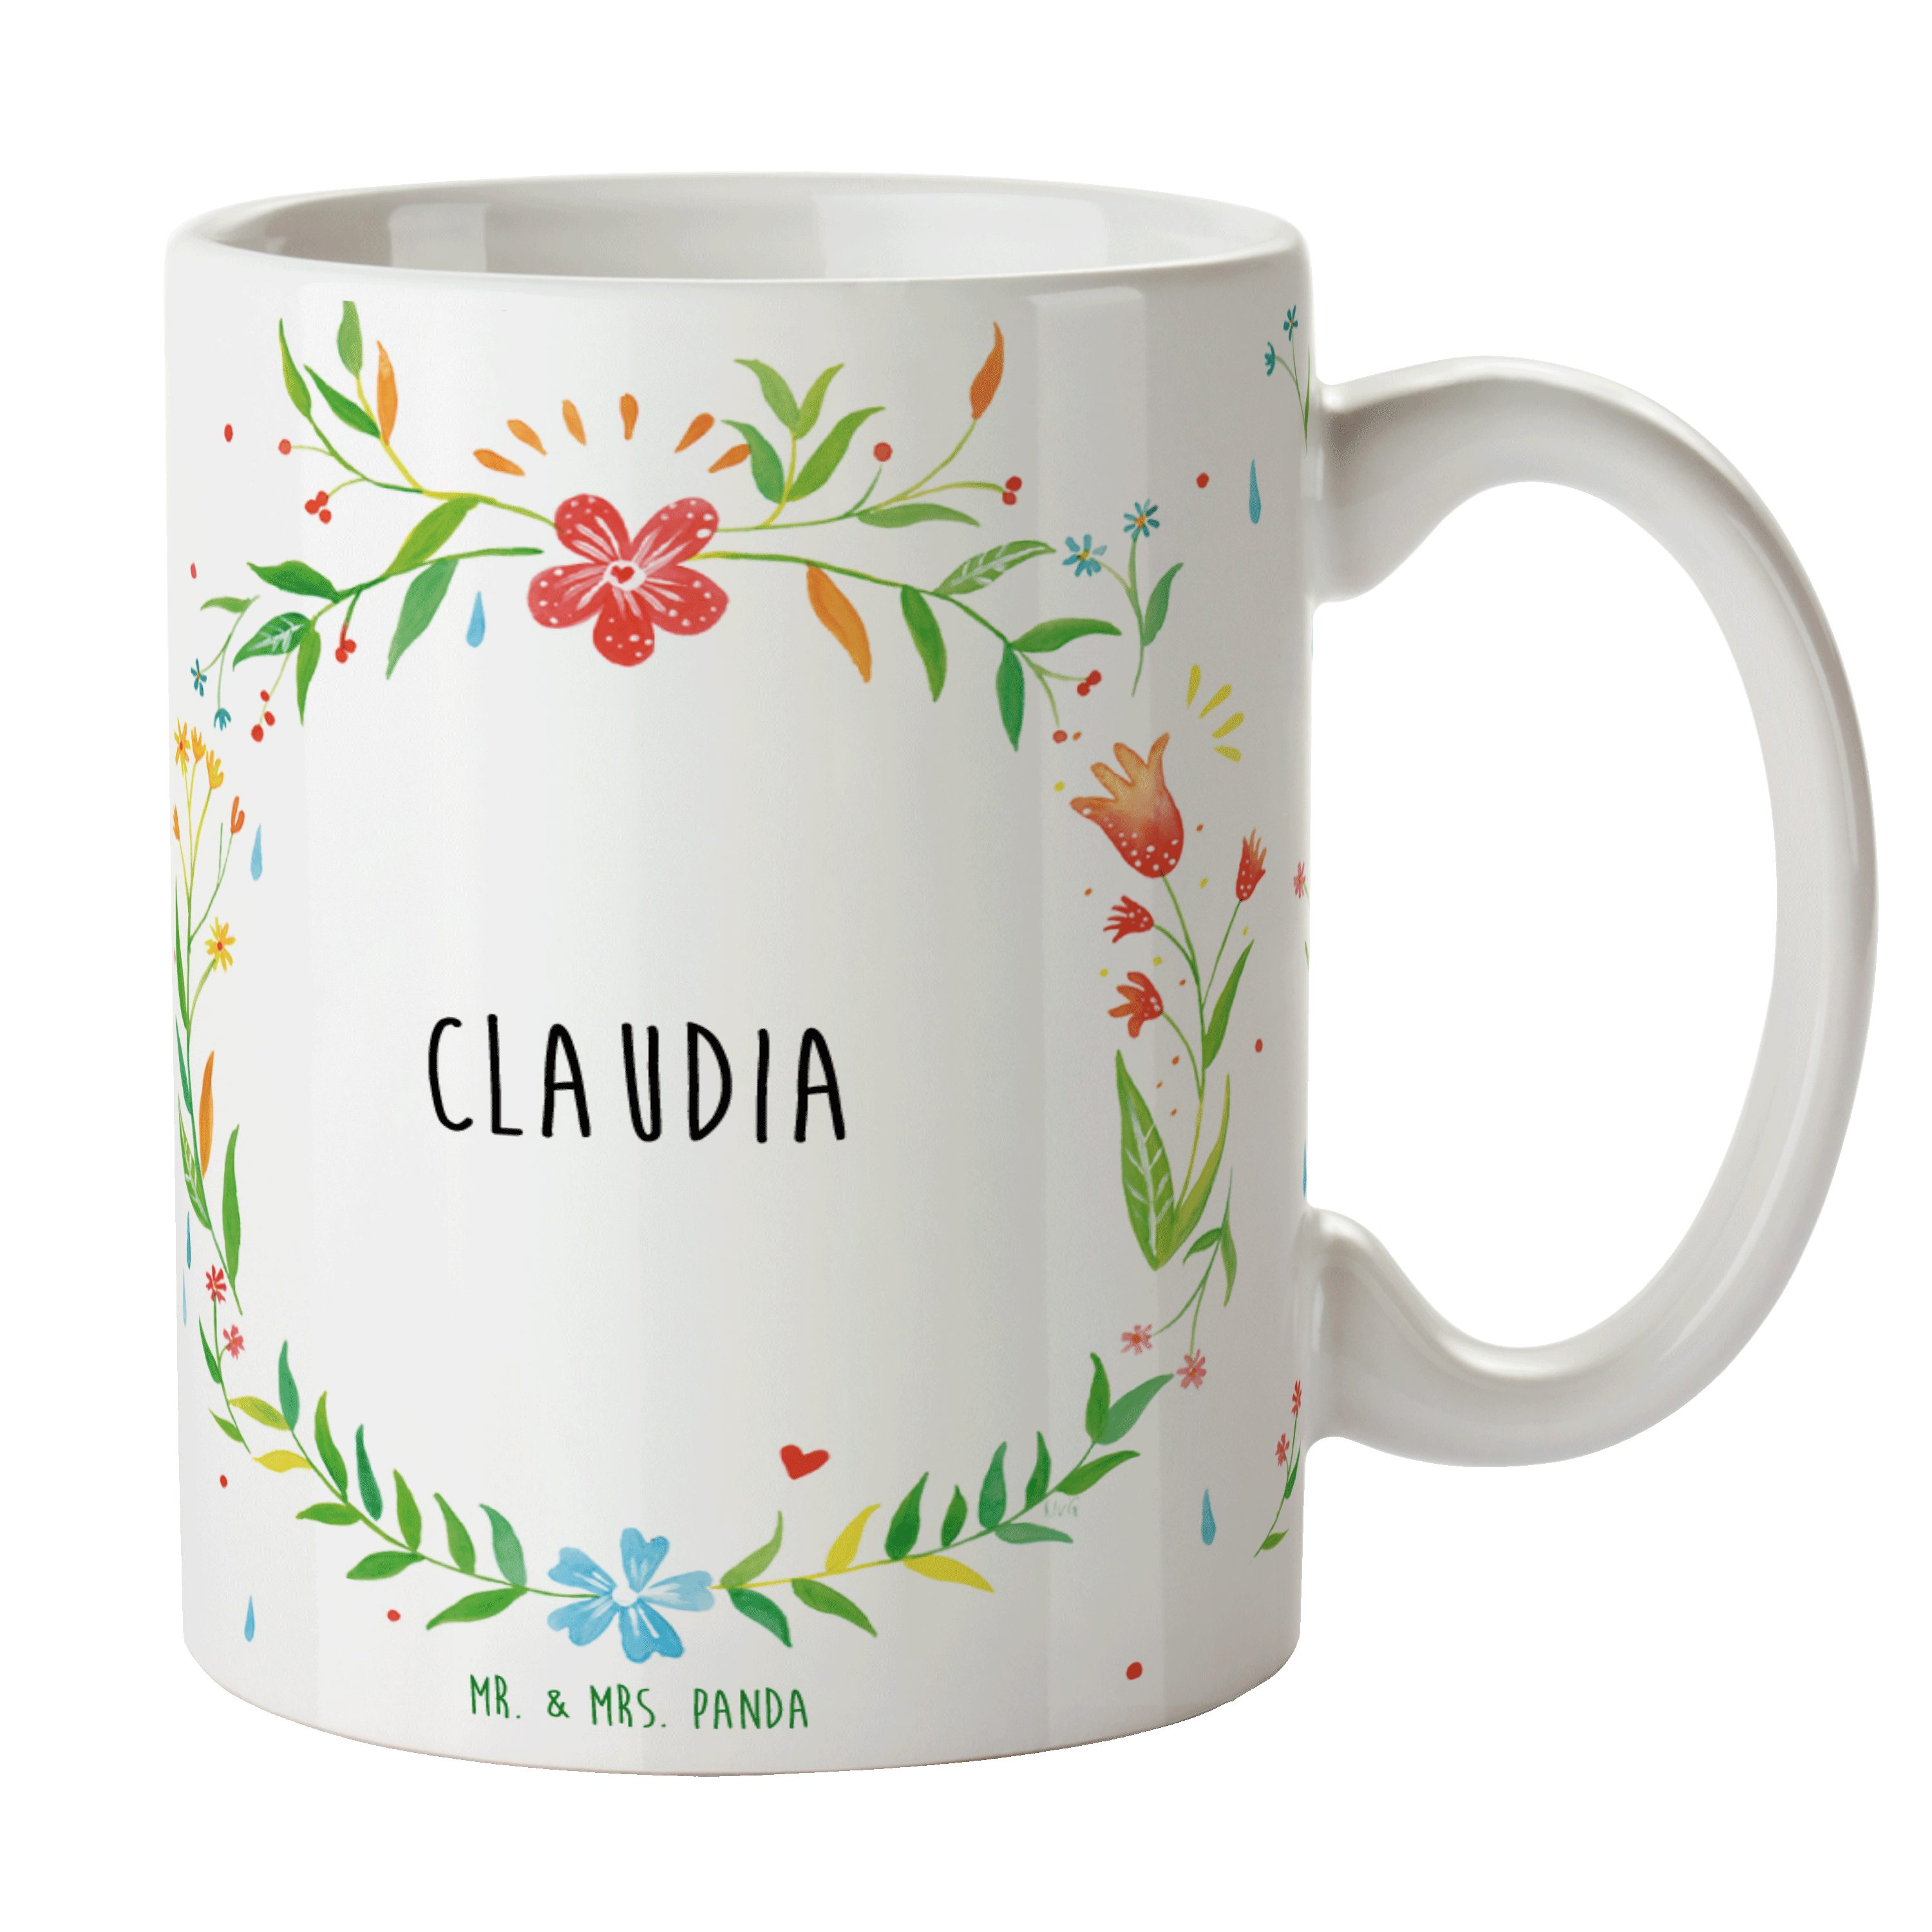 Mr. & Mrs. Panda Tasse Claudia - Geschenk, Tasse Sprüche, Tasse Motive, Kaffeebecher, Becher, Keramik